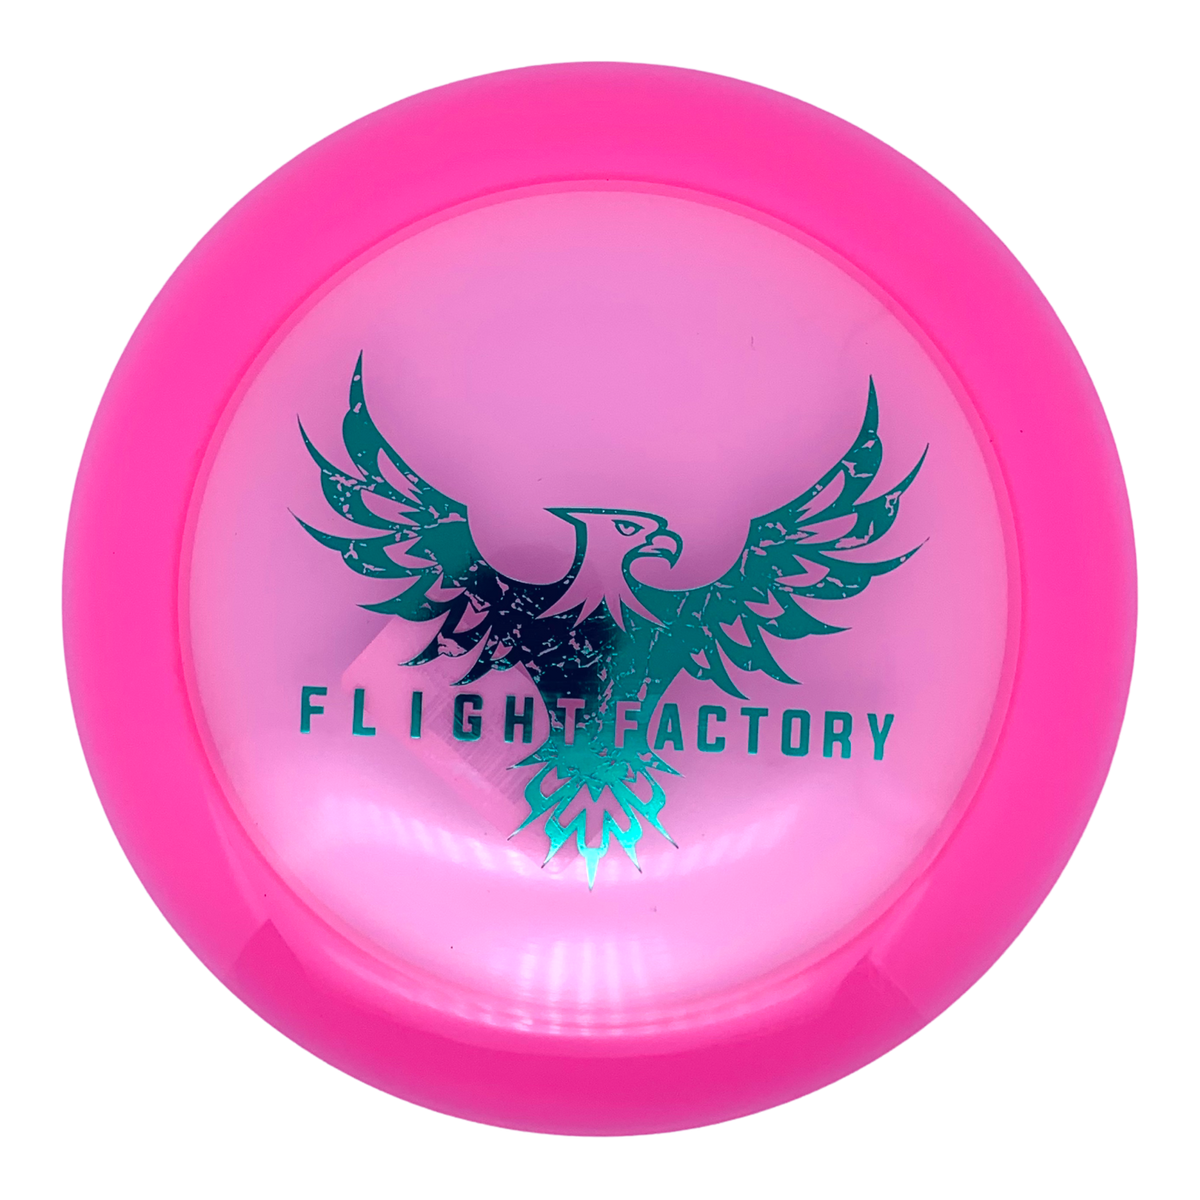 Flight Factory Eagle Discmania Active Premium Majesty